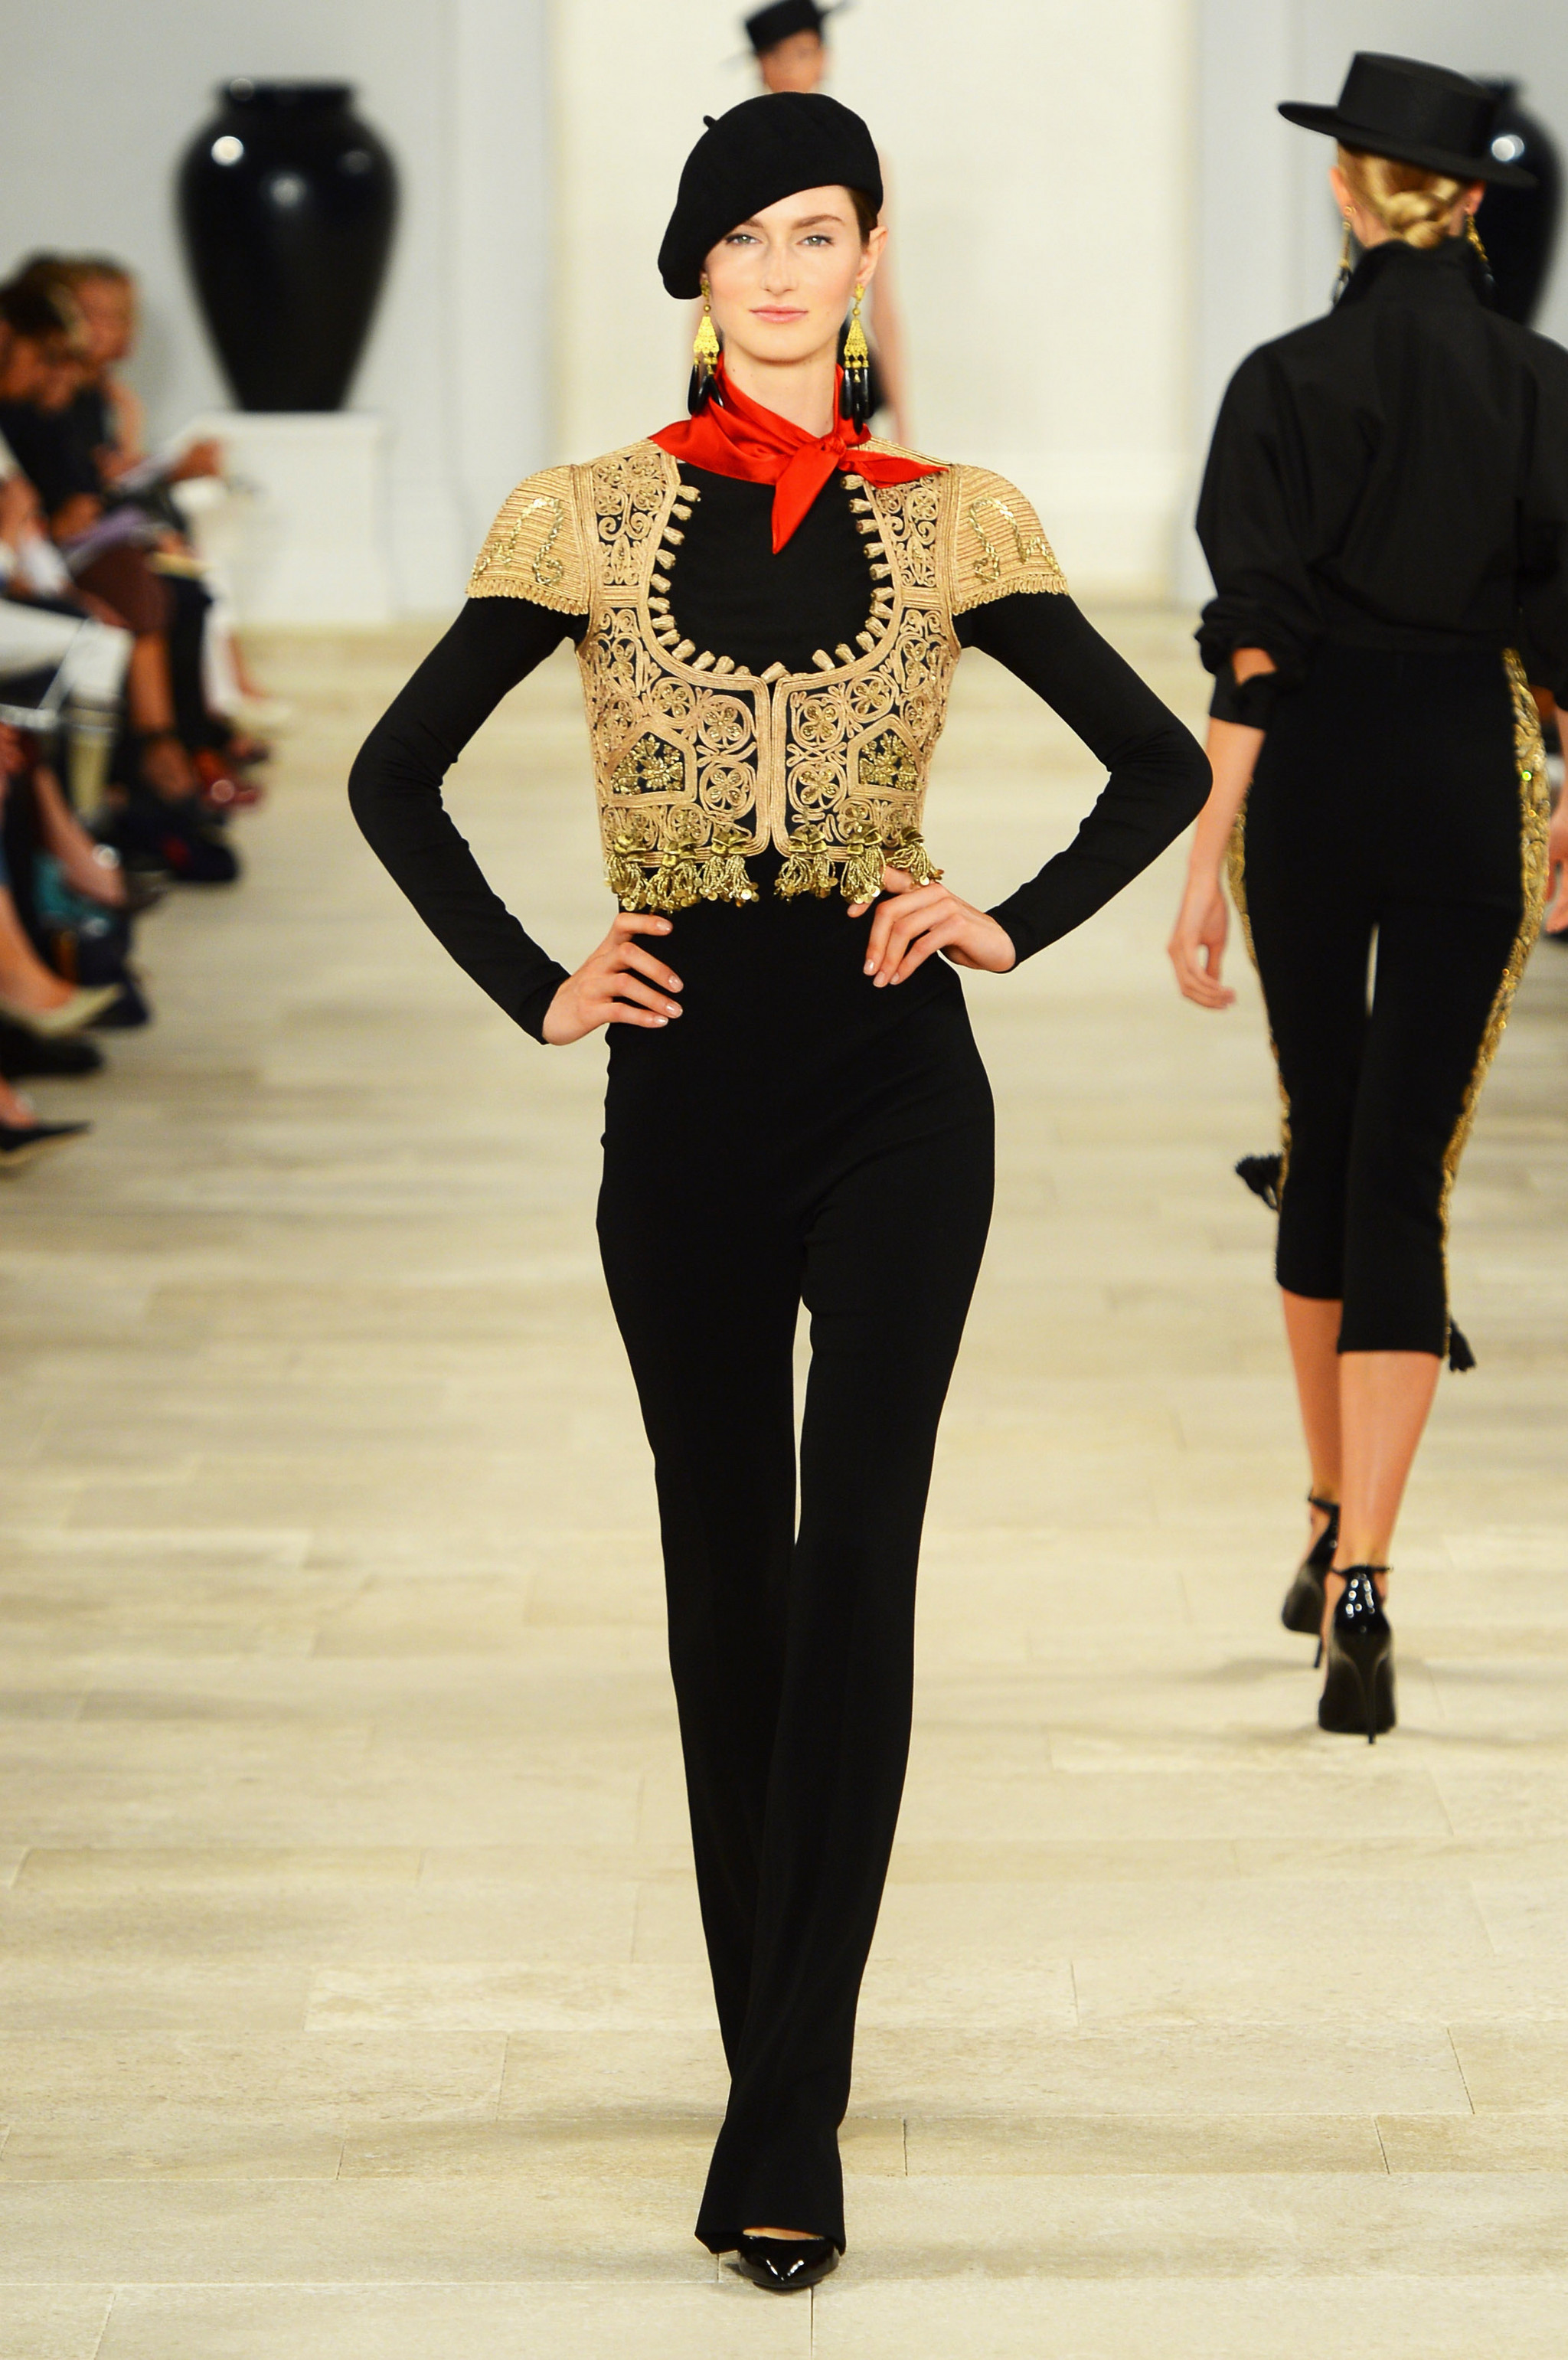 Activa  Semana da Moda de Nova Iorque: Ralph Lauren inspira-se em